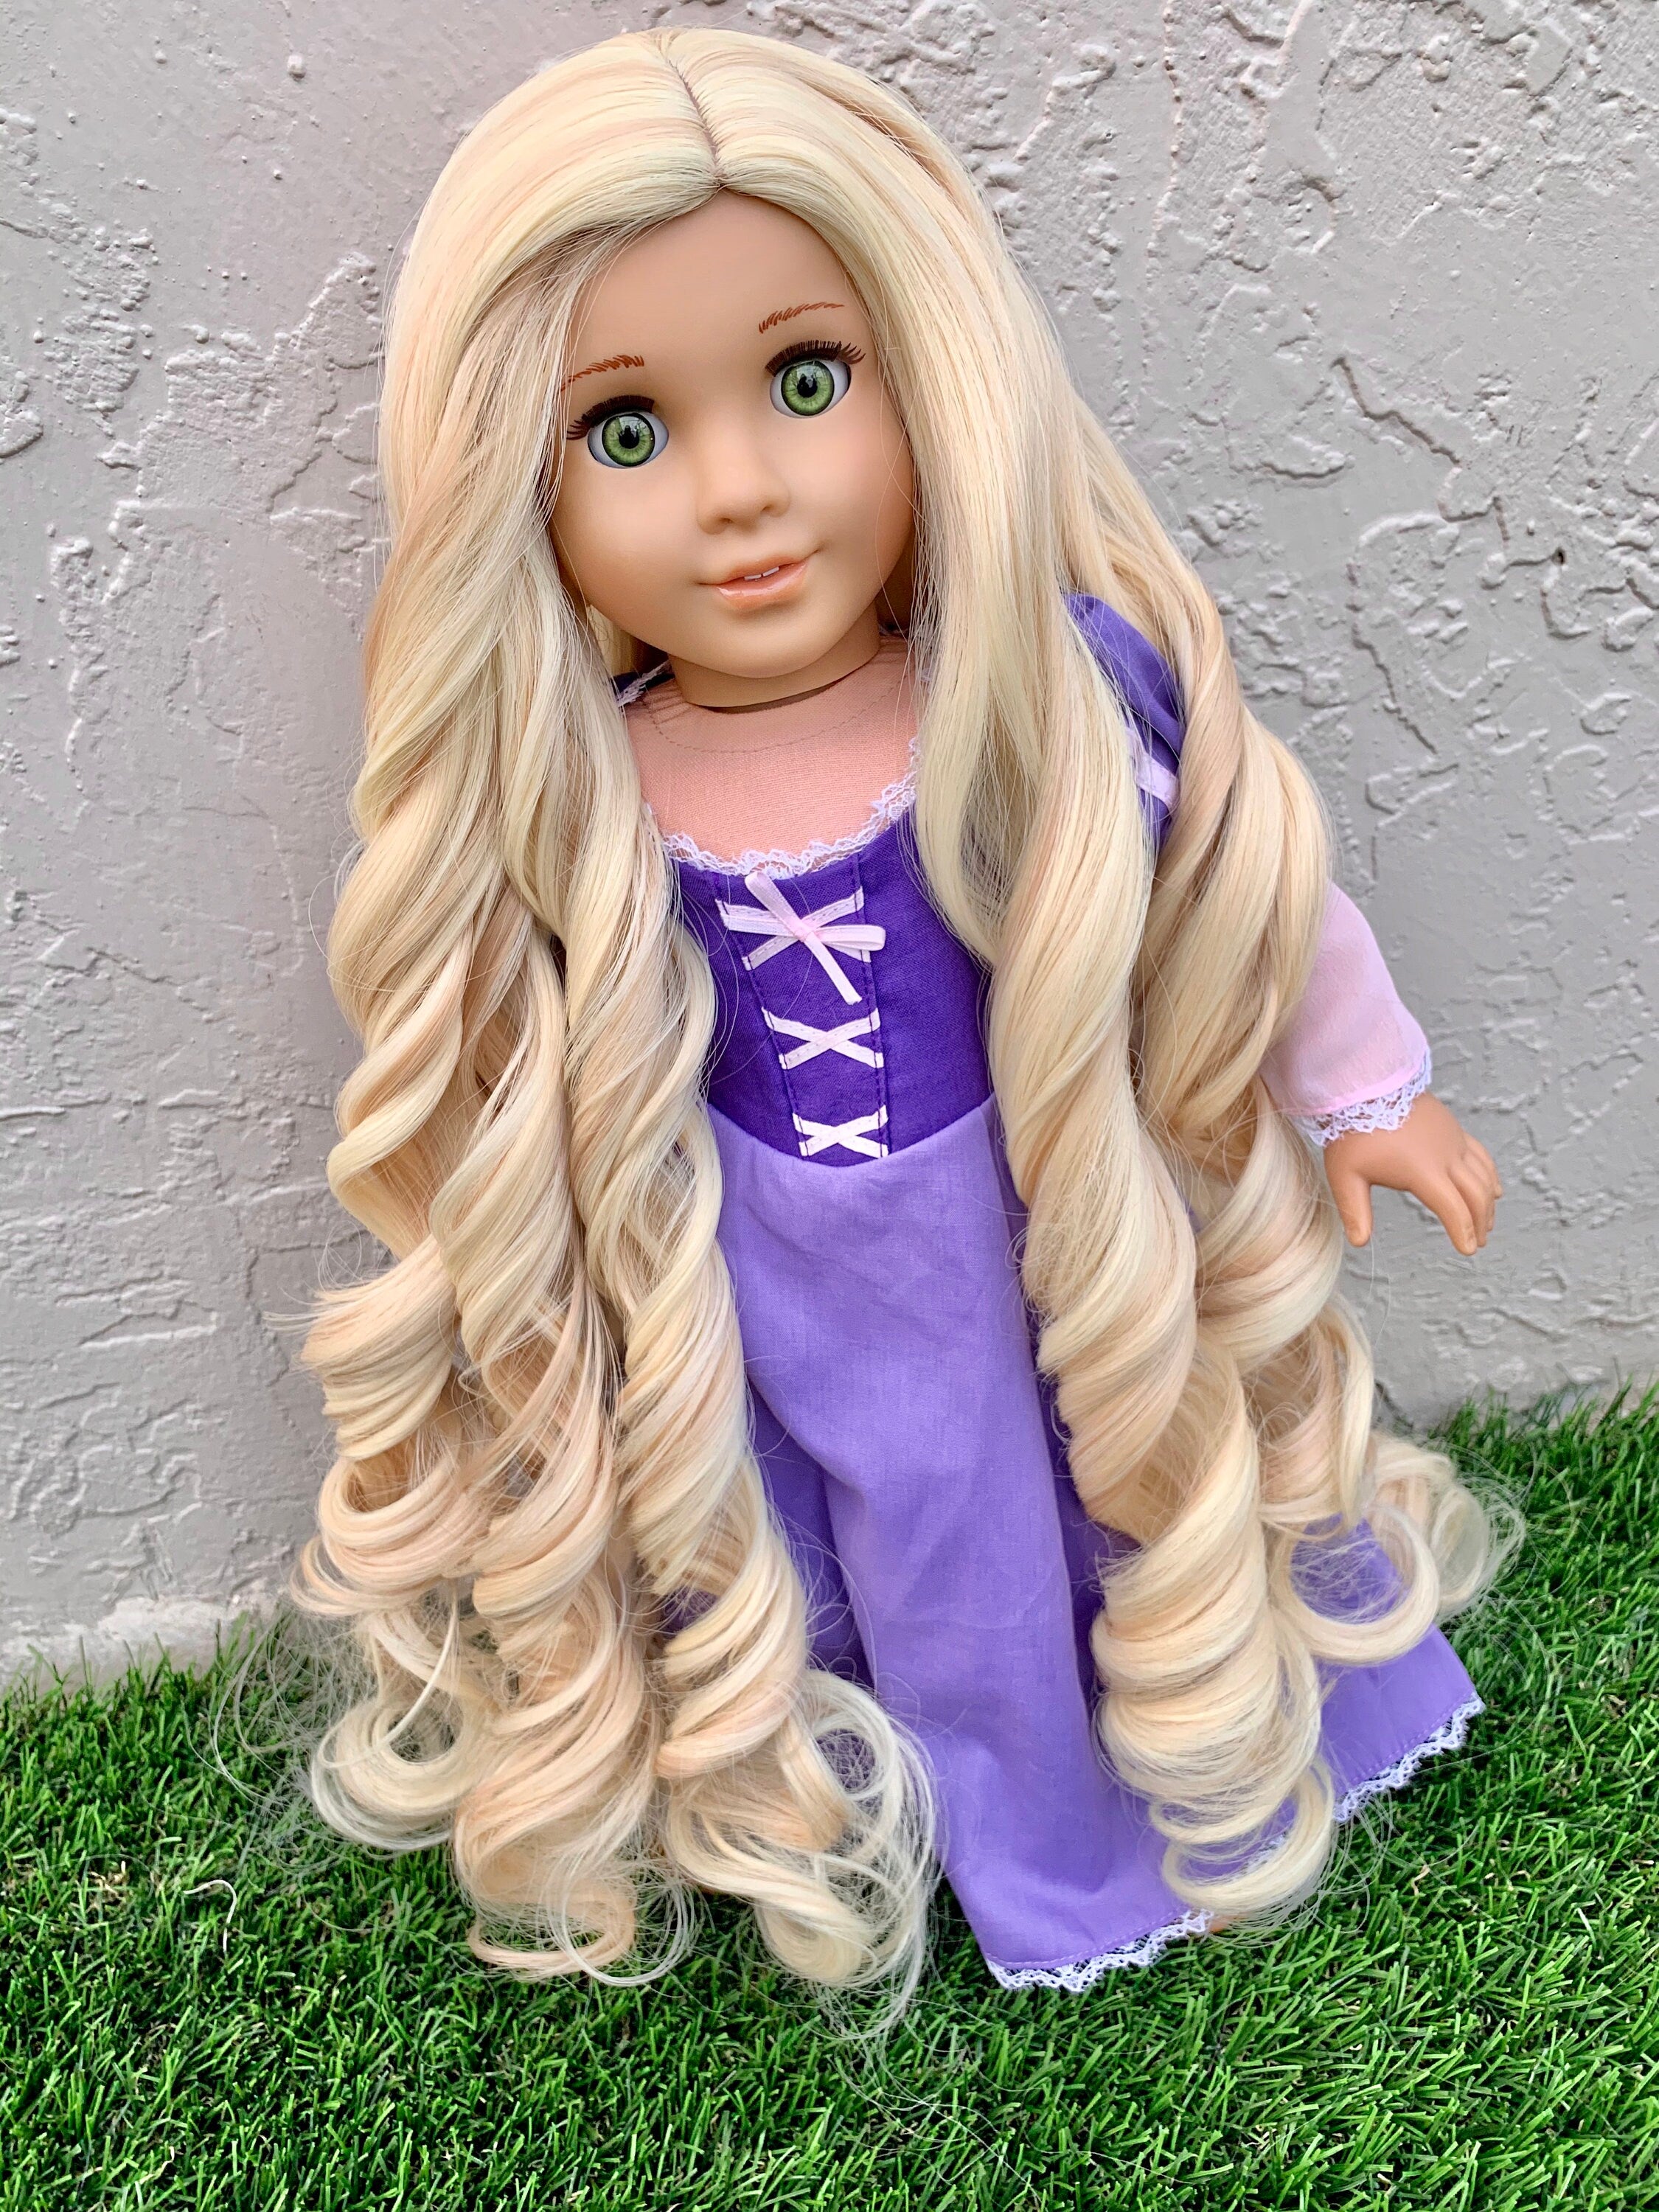 Custom doll wig for 18" American Girl Dolls -Heat & Tangle Resistant - fits 10-11" size of 18" dolls OG Blythe BJD Gotz dark Rapunzel